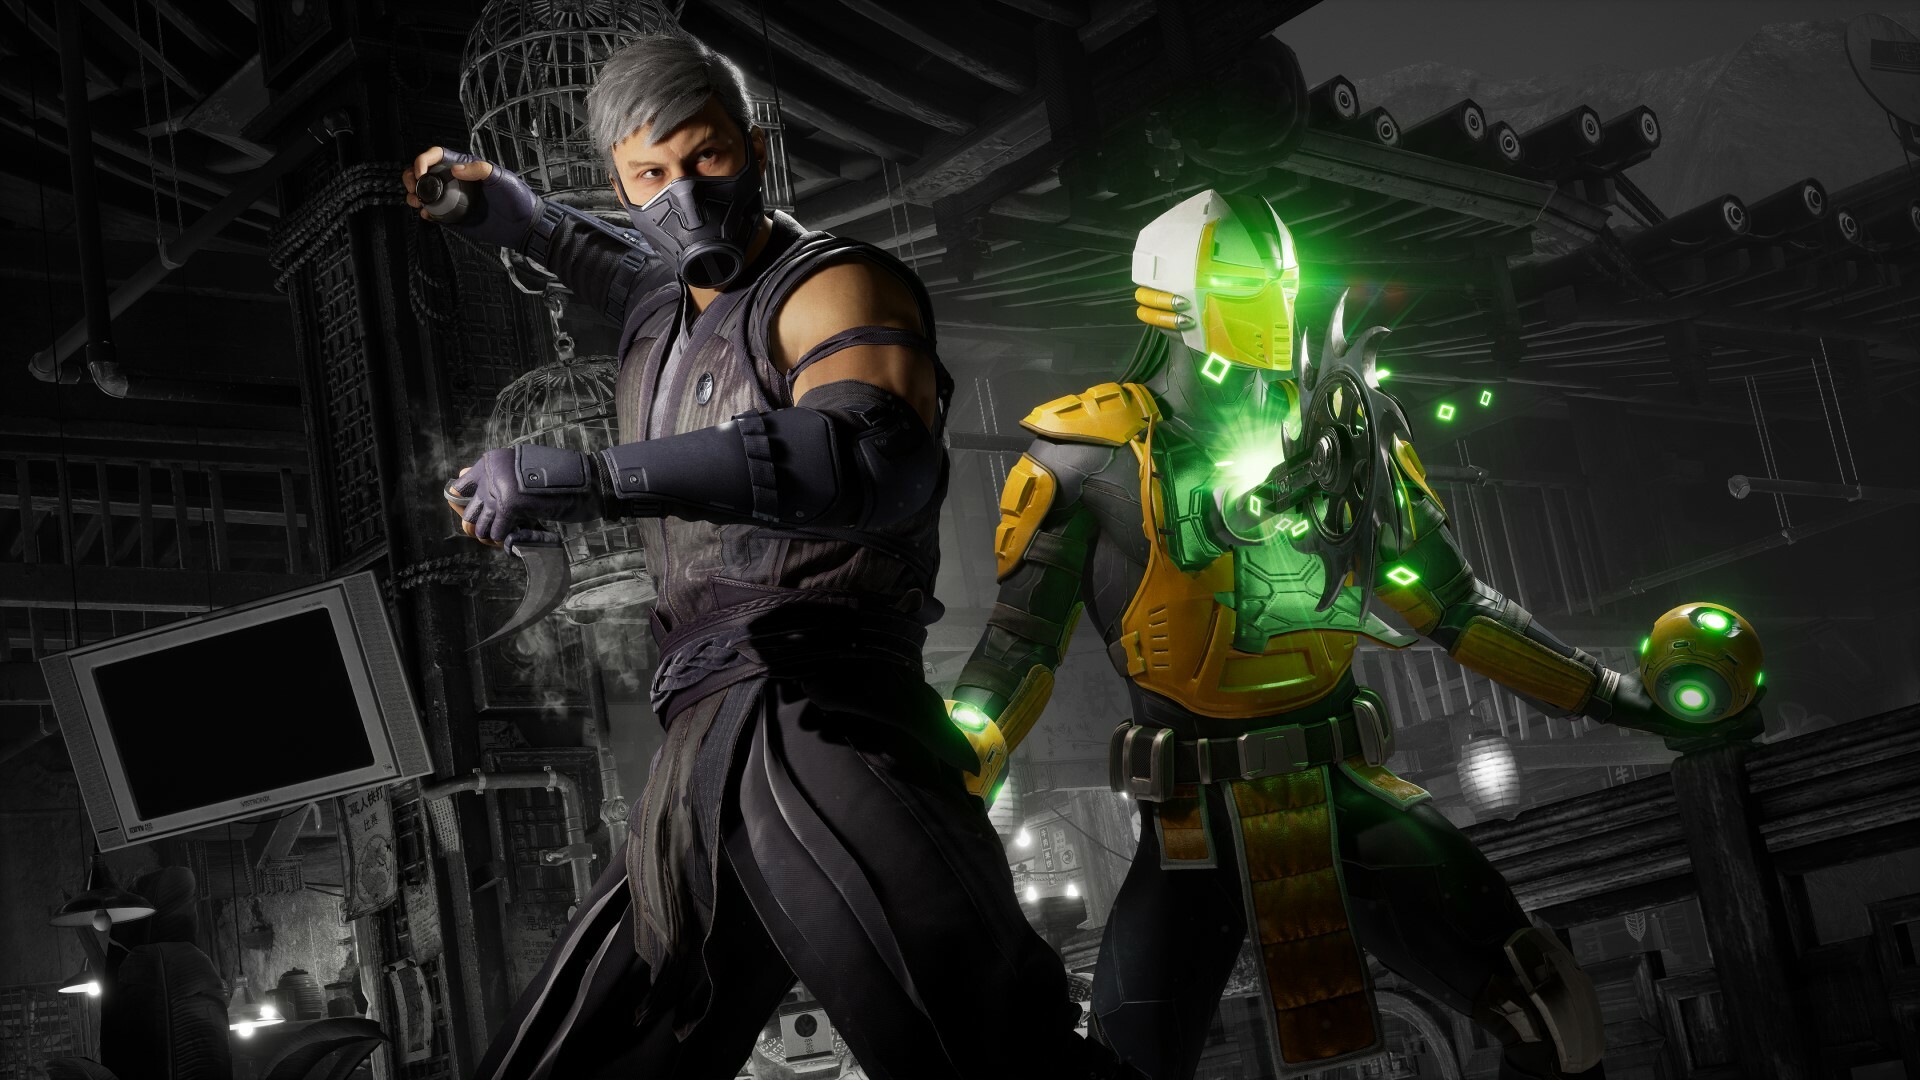 Mortal Kombat 11: Kano MK3 Costume, Klassic Tower Playthrough